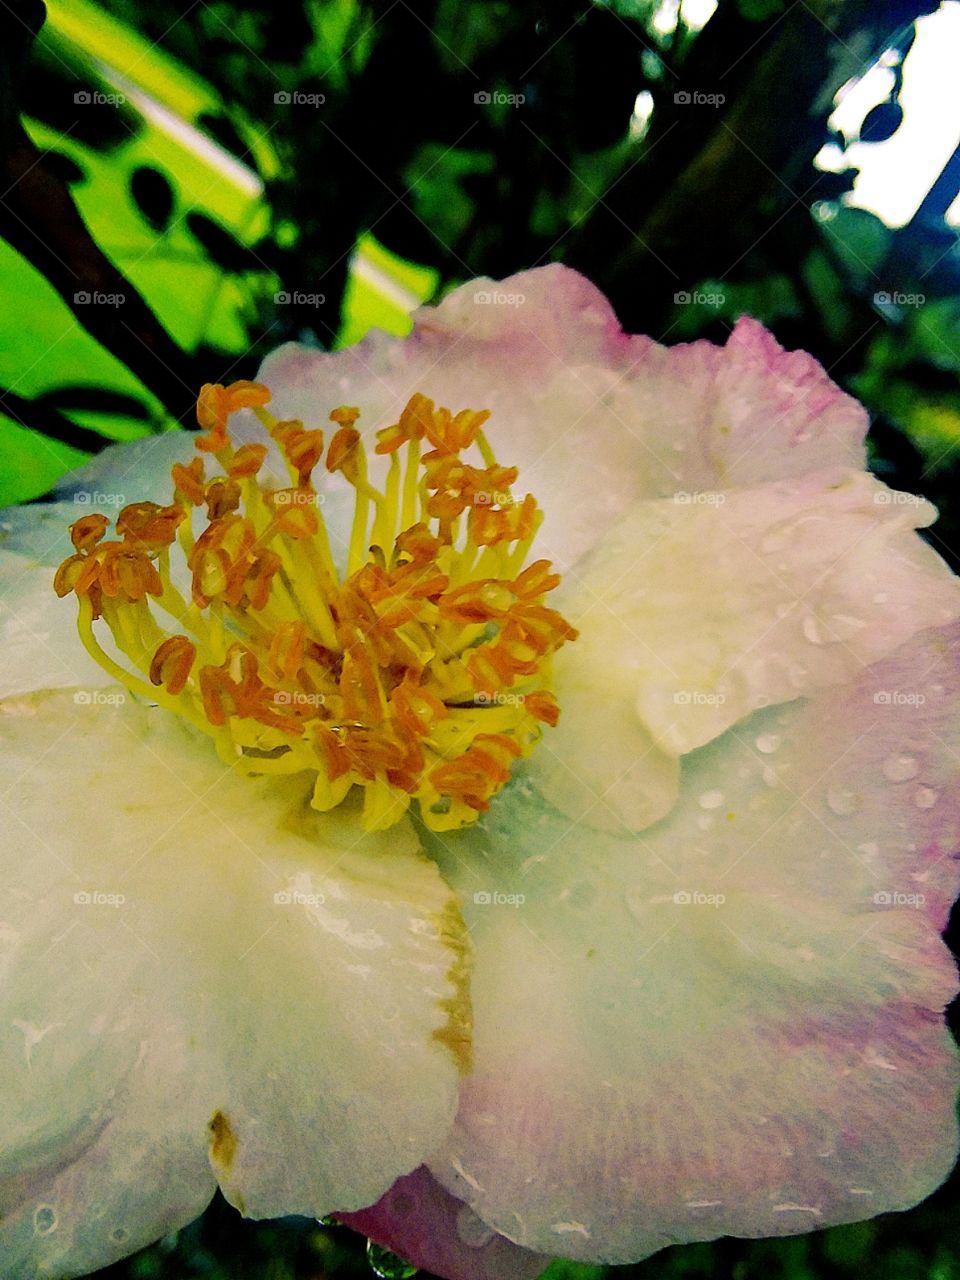 colorful flower delicate petals wet with rain